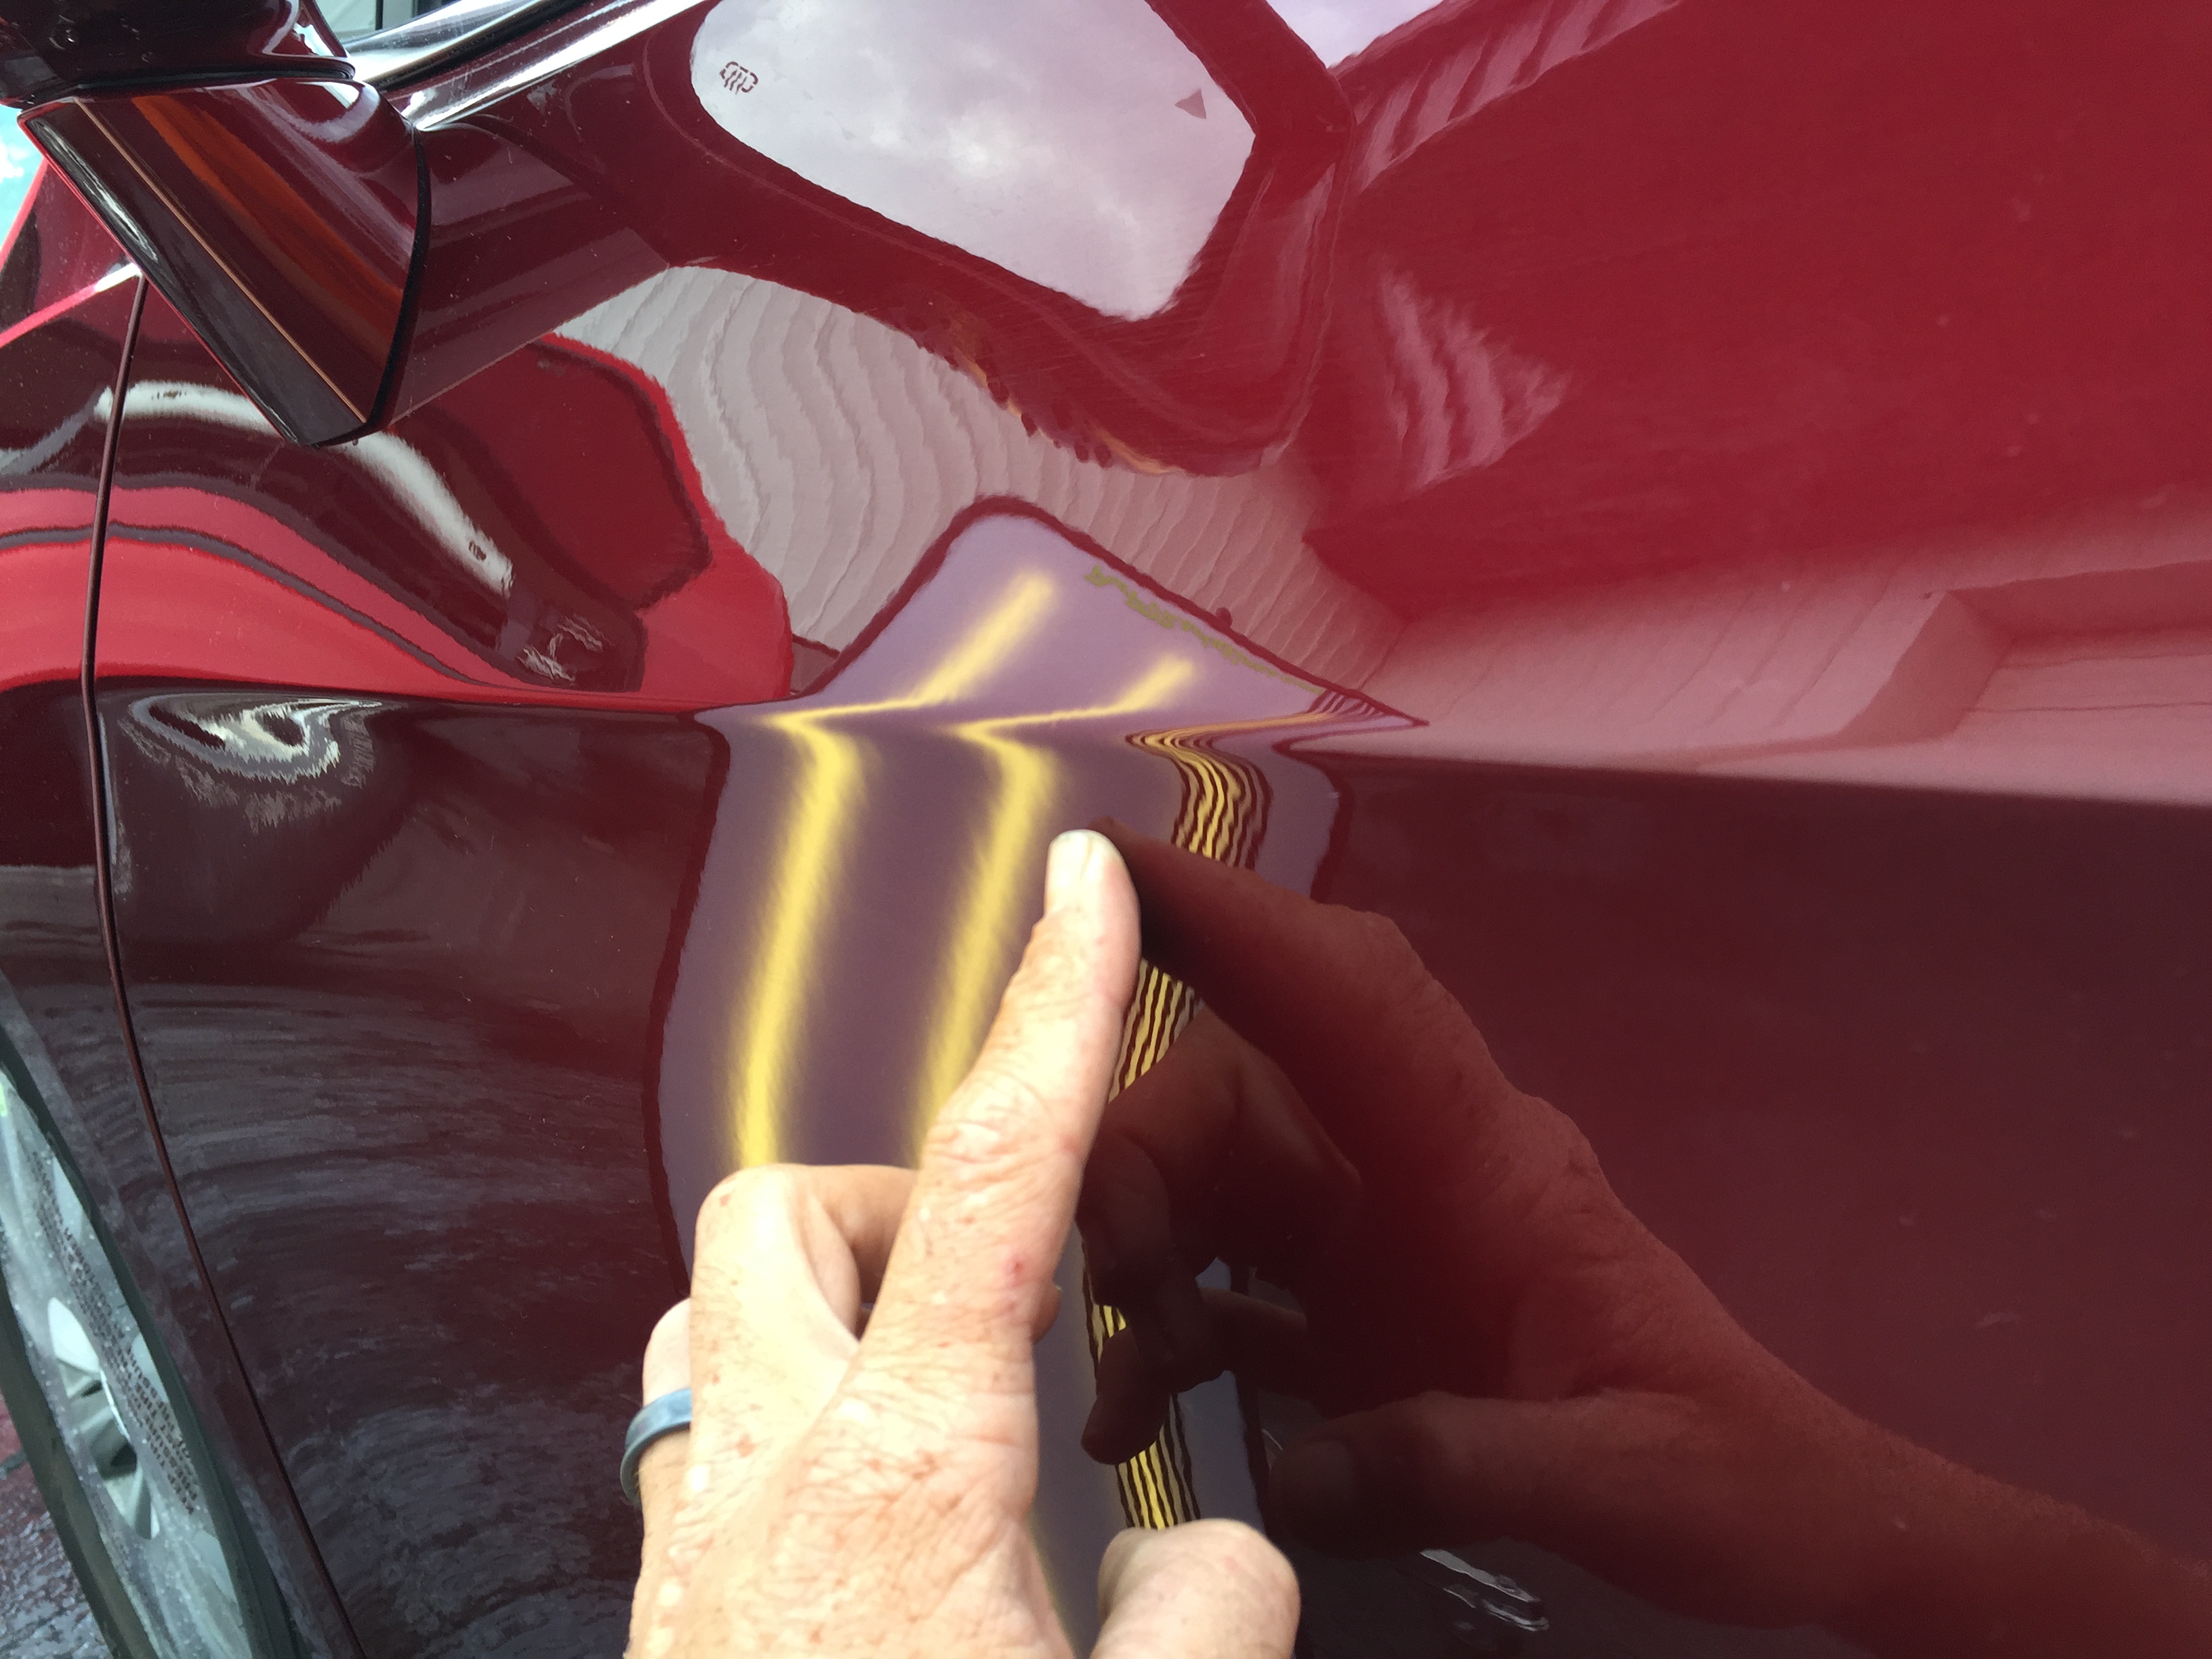 2017 Chrysler Pacifica Touring, Mobile dent Repair Springfield IL, Taylorville IL, Decatur IL, Sharp body line paintless dent repair by Michael Bocek